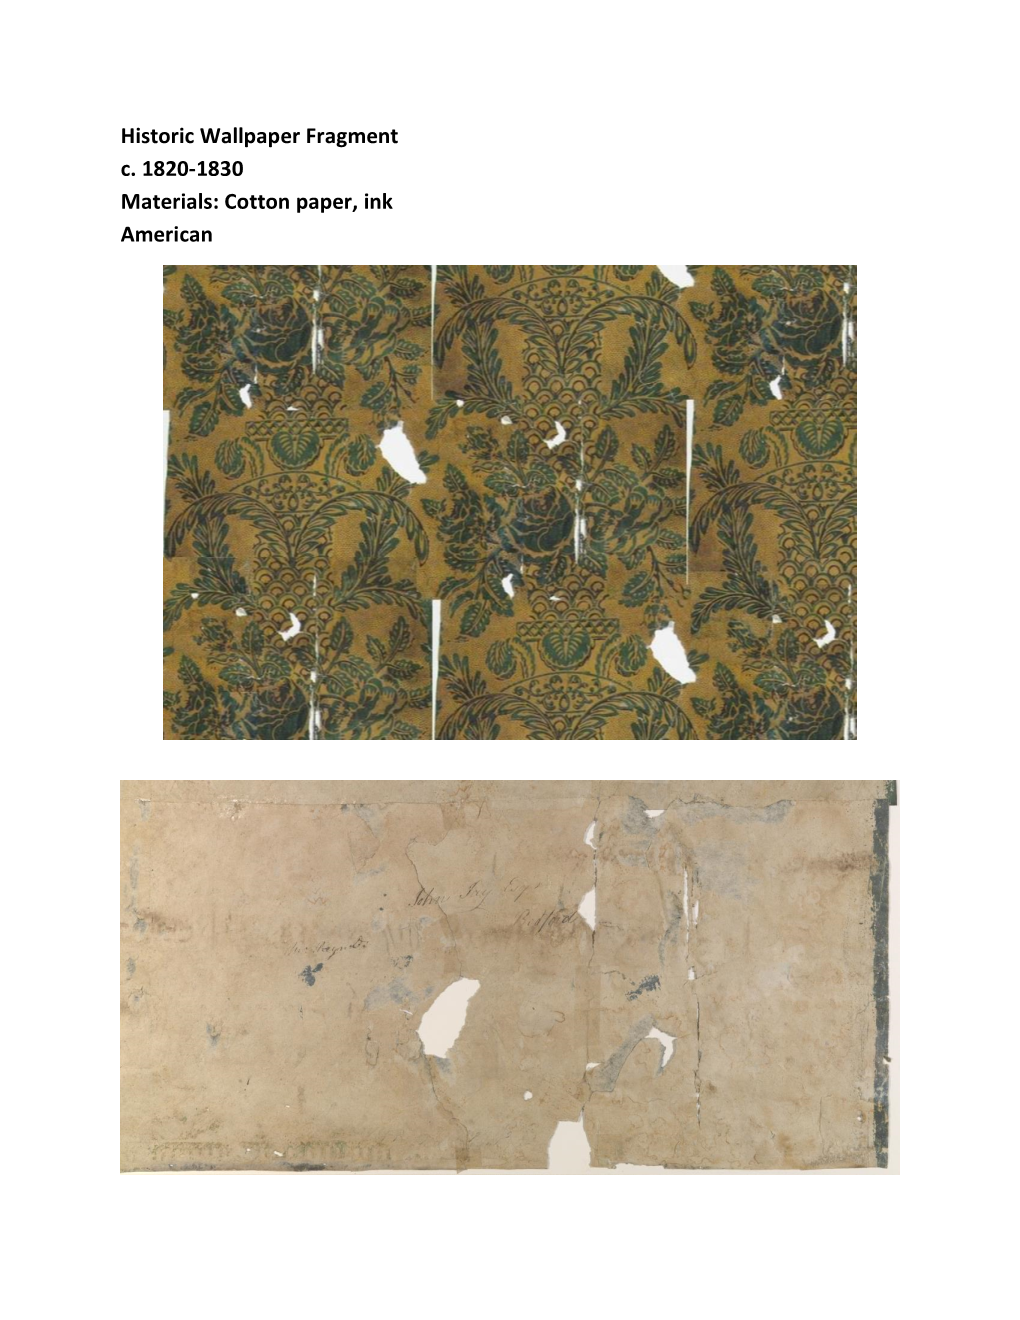 Historic Wallpaper Fragment C. 1820-1830 Materials: Cotton Paper, Ink American